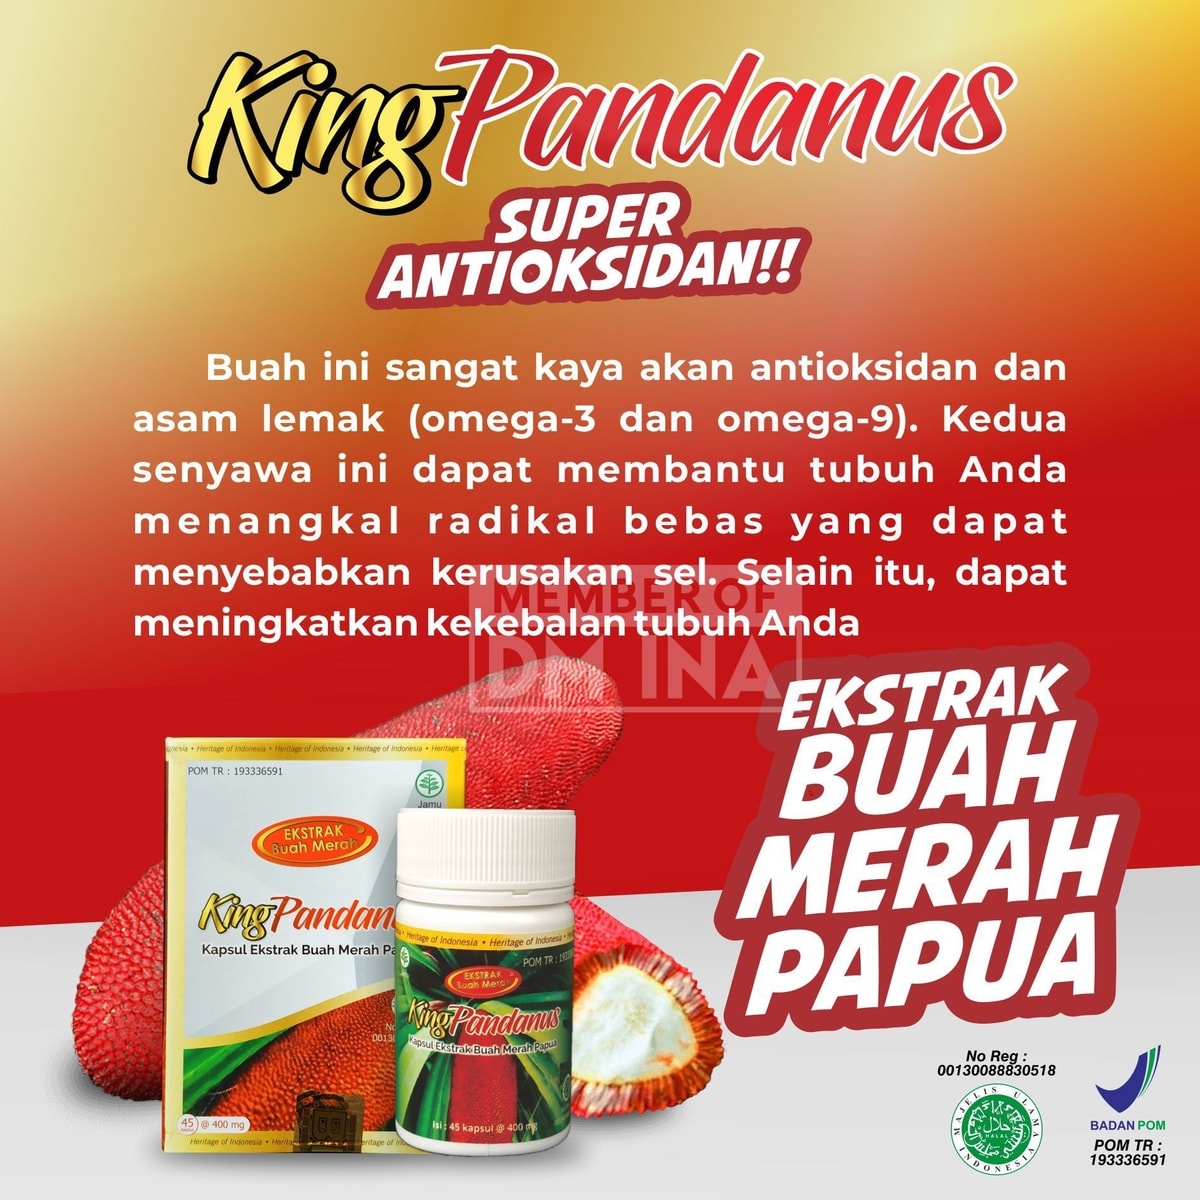 King Pandanus, super antioksidan